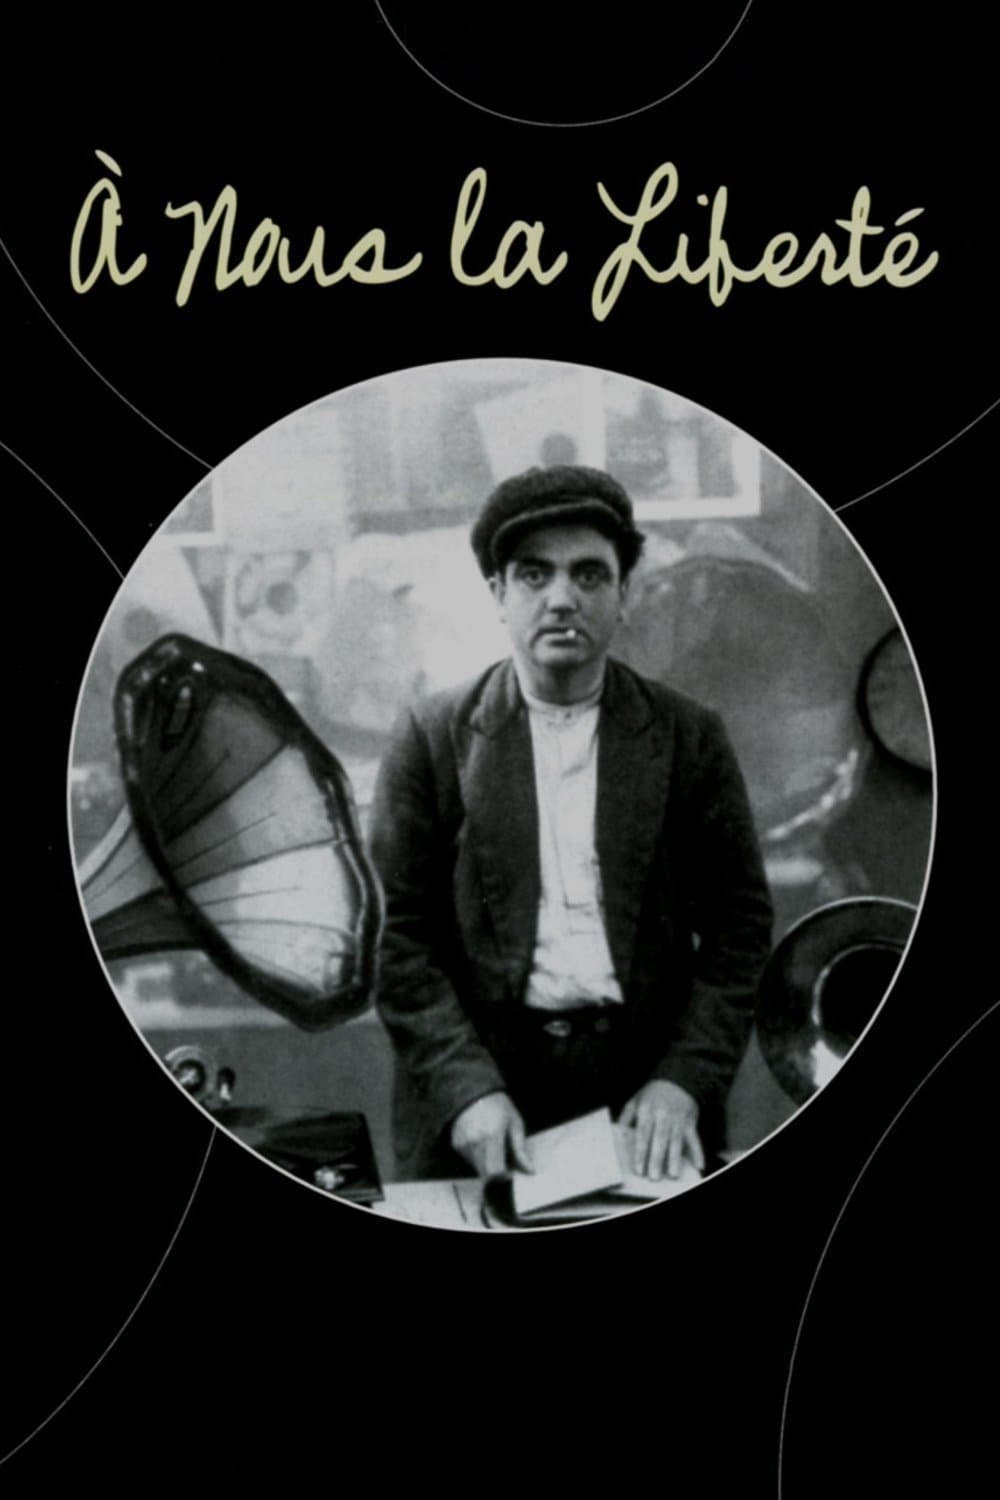 Viva la libertad (1931)